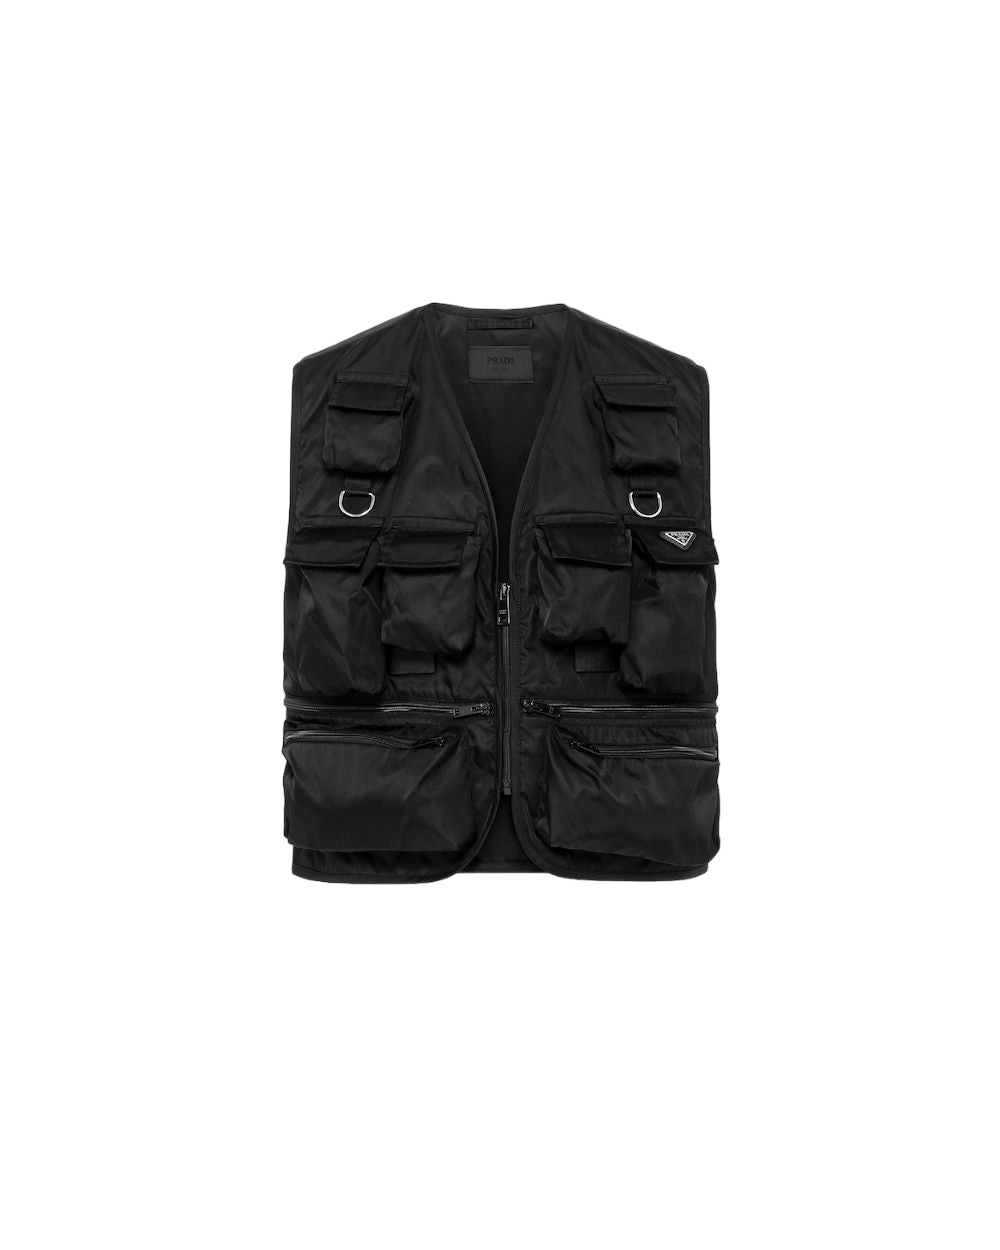 PRADA Classic Black Vest for Men - Sustainable and Stylish